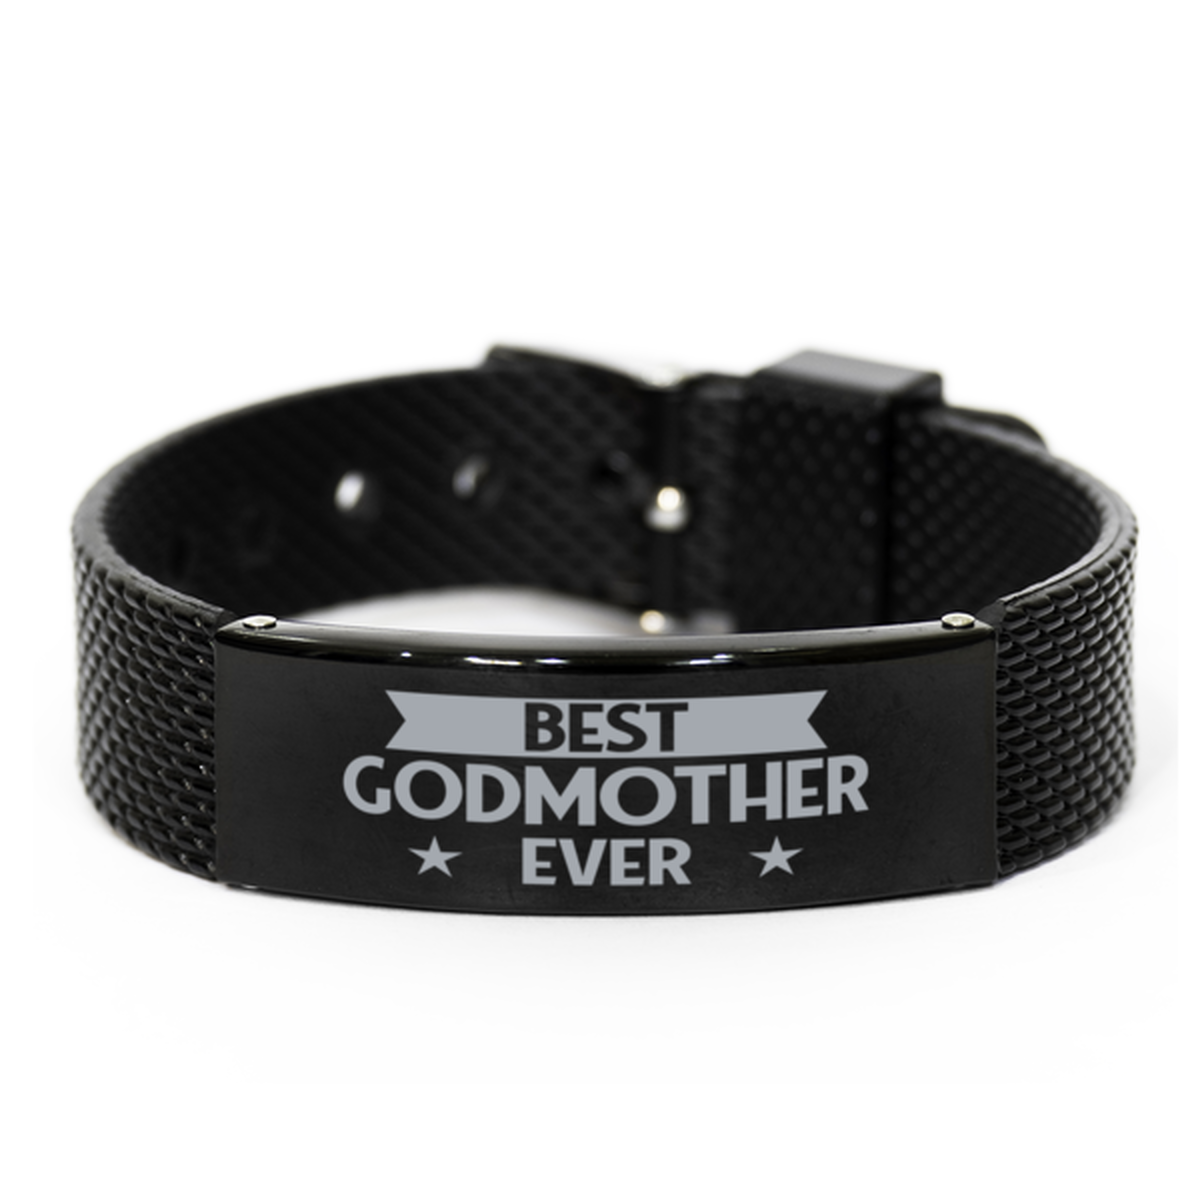 Best Godmother Ever Godmother Gifts, Gag Engraved Bracelet For Godmother, Best Family Gifts For Women